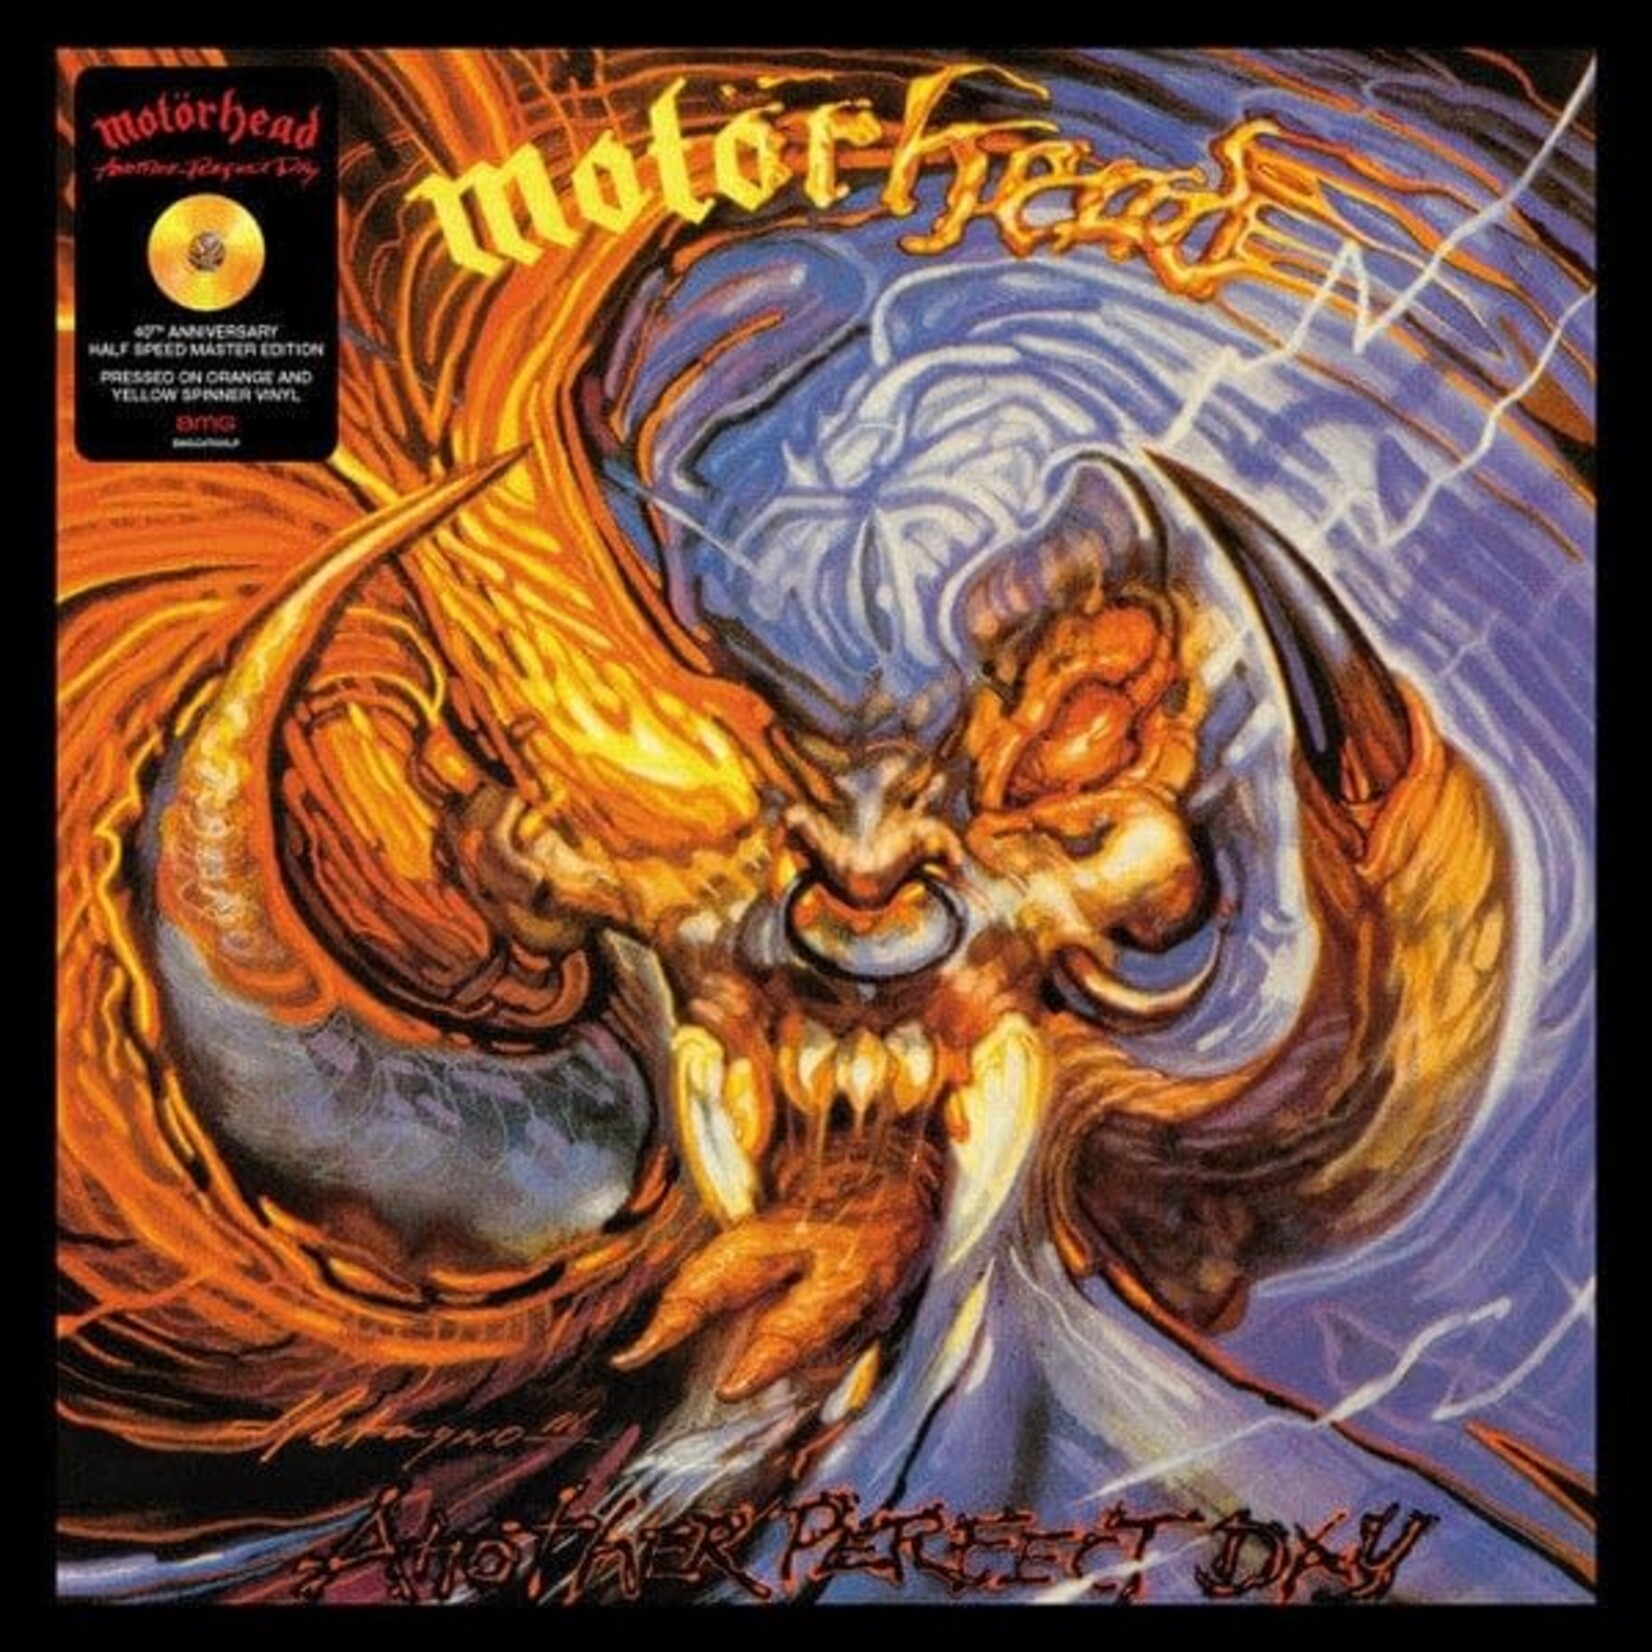 [New] Motorhead - nother Perfect Day (40th Anniversary, orange & yellow vinyl, half-speed master)